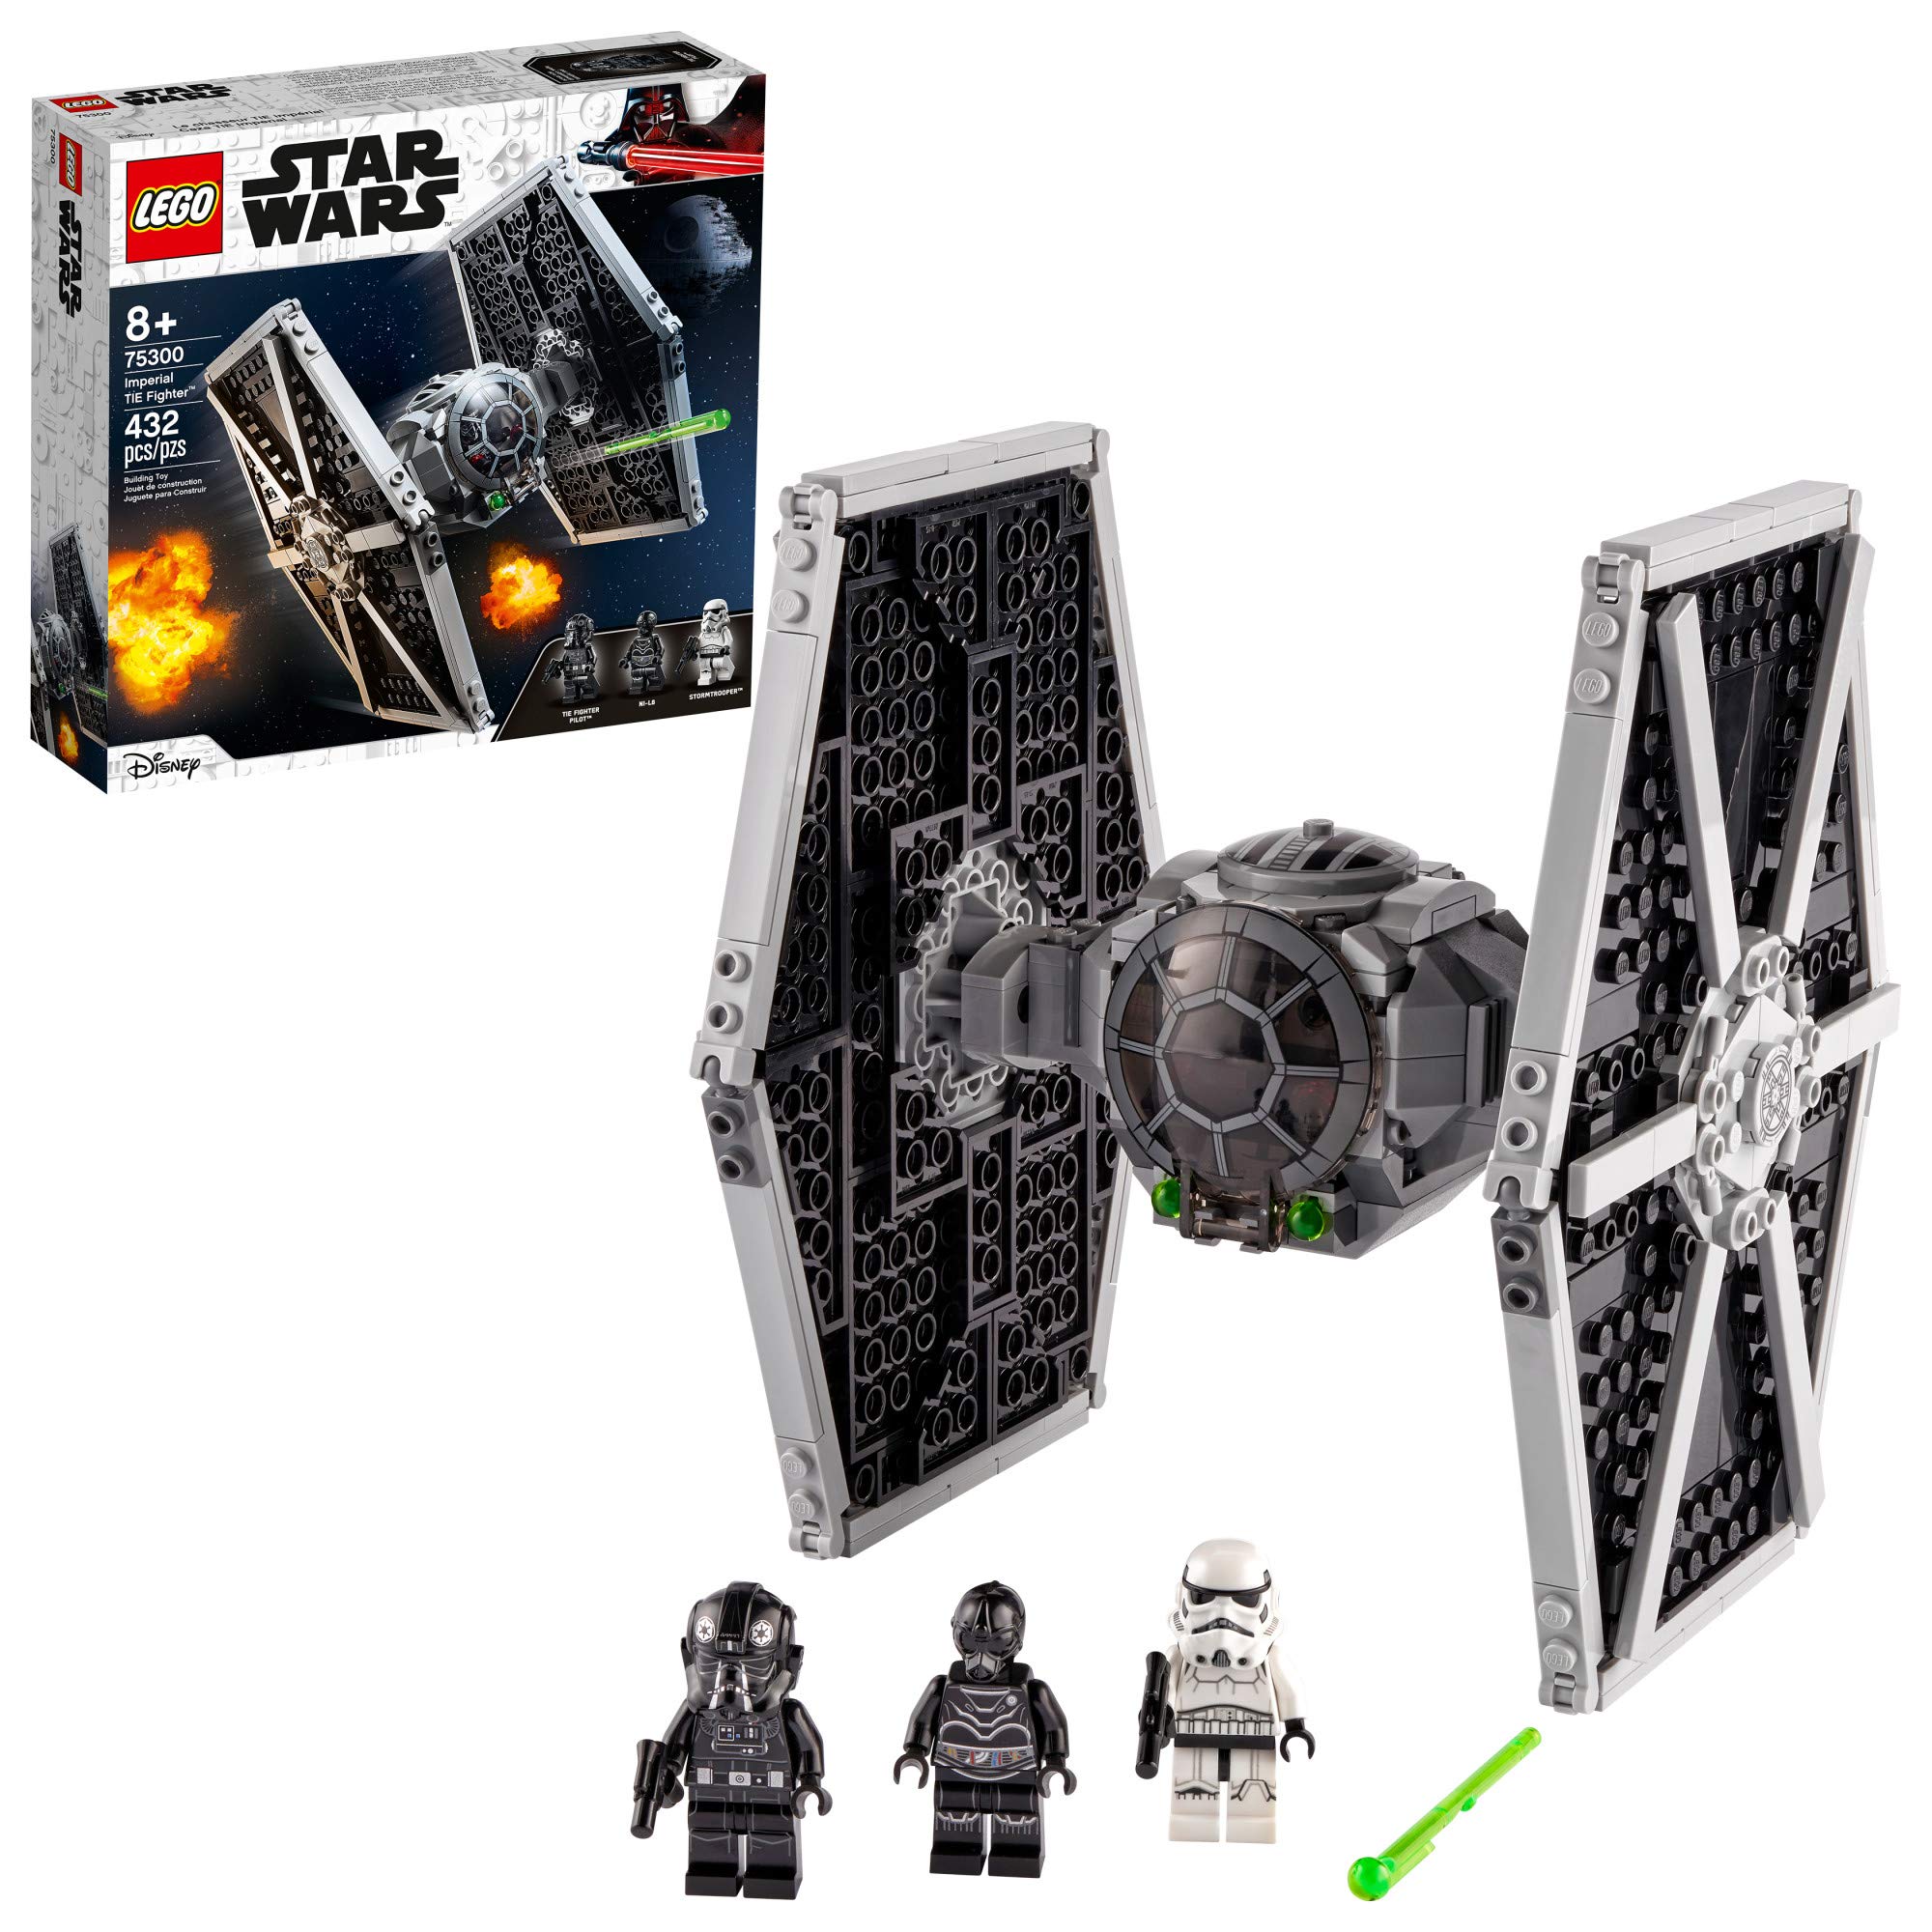 $29.19: Lego Star Wars Imperial TIE Fighter 75300